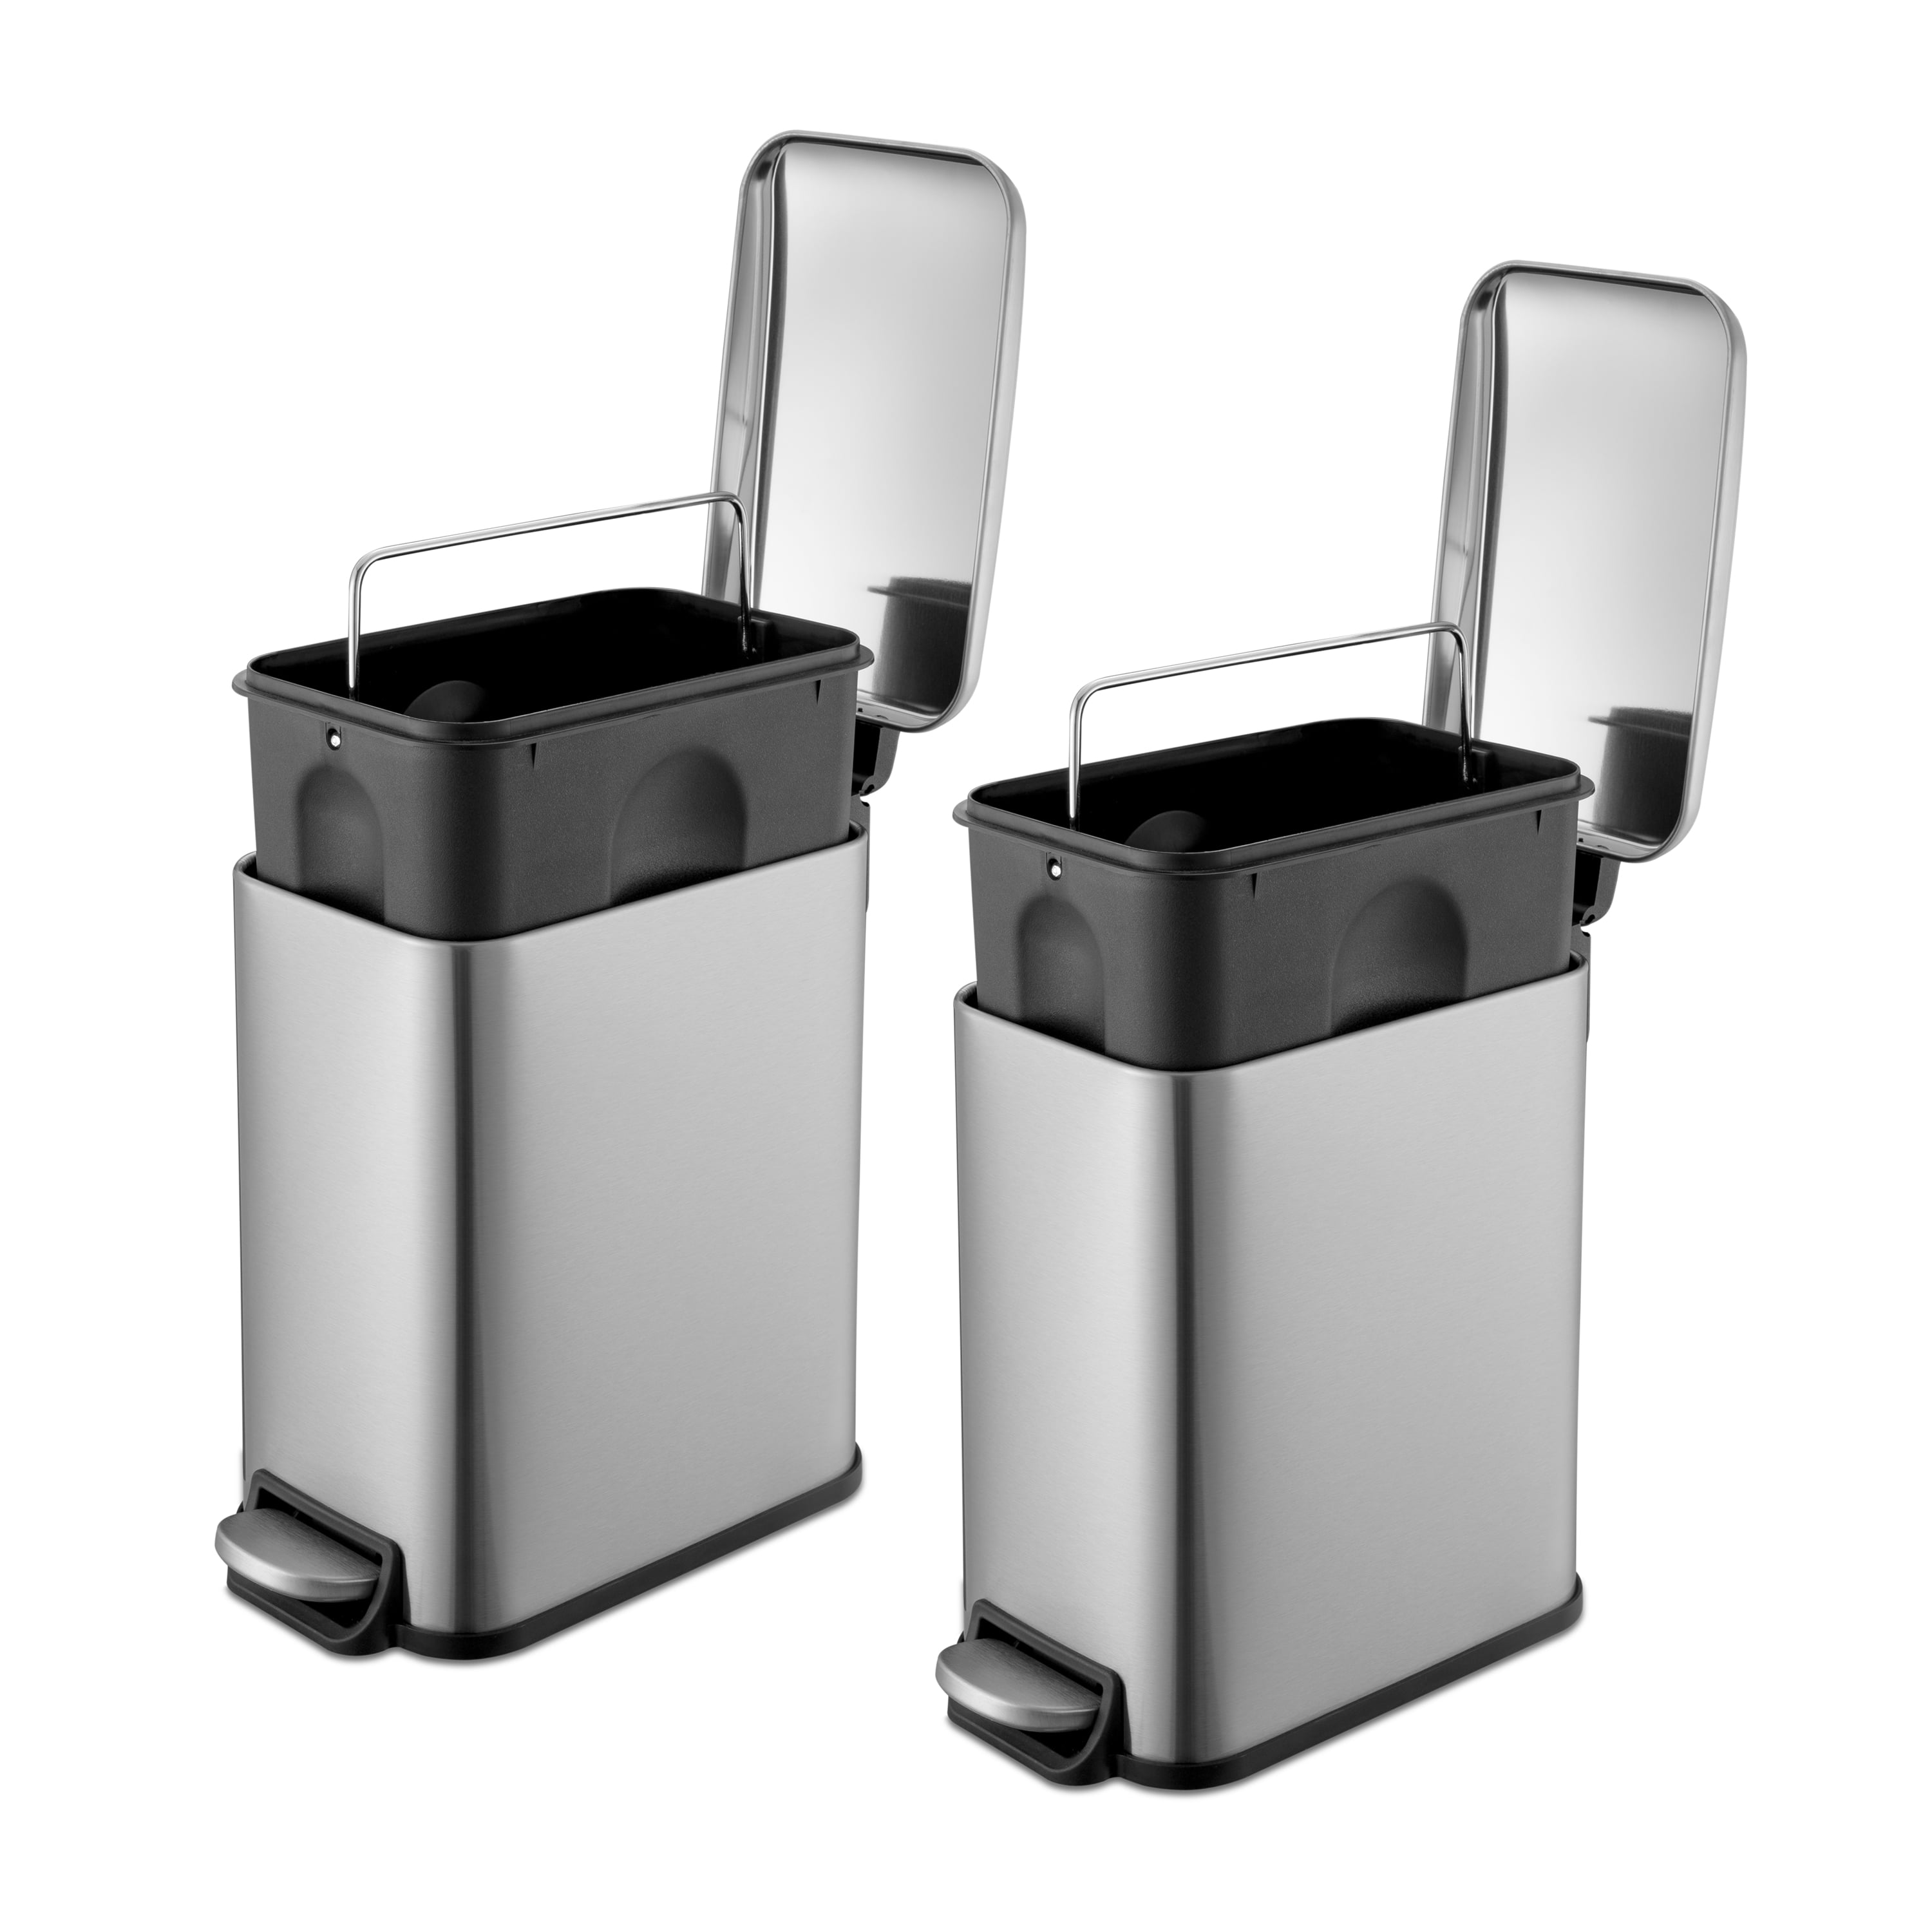 Qualiazero 1.3 Gallons Steel Step On Trash Can & Reviews